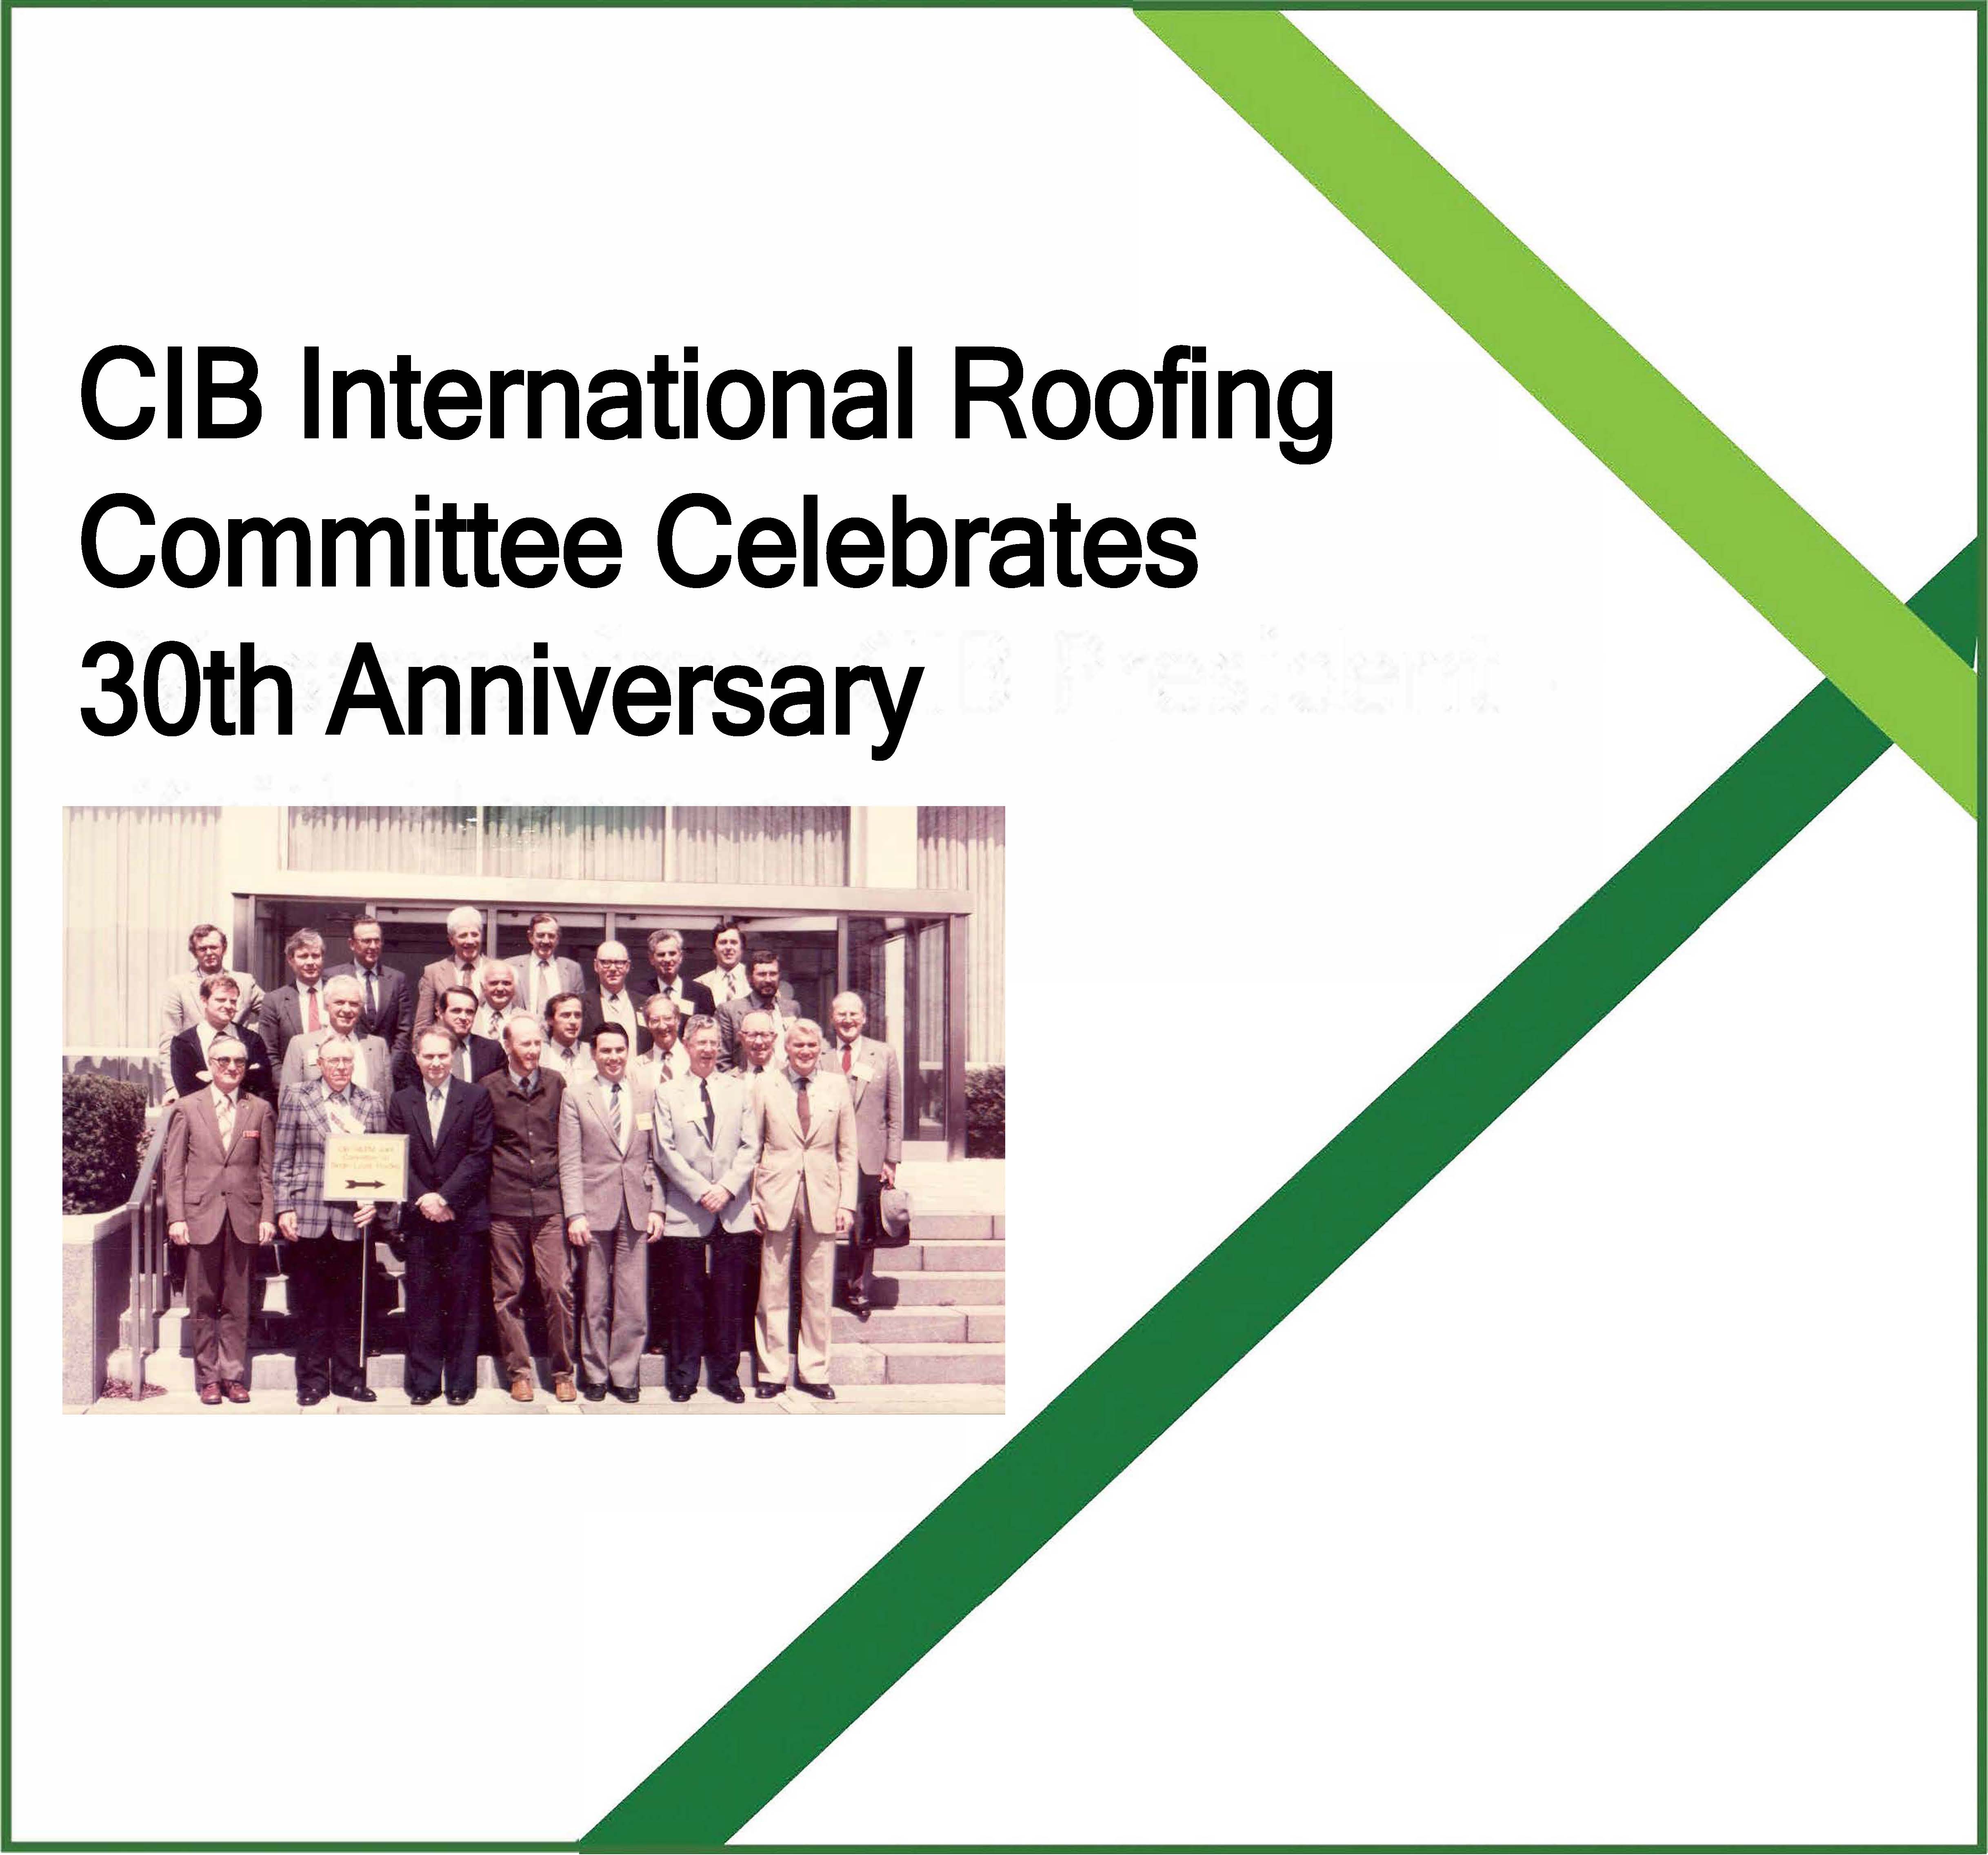 CIB International Roofing Committee Celebrates 30th Anniversary